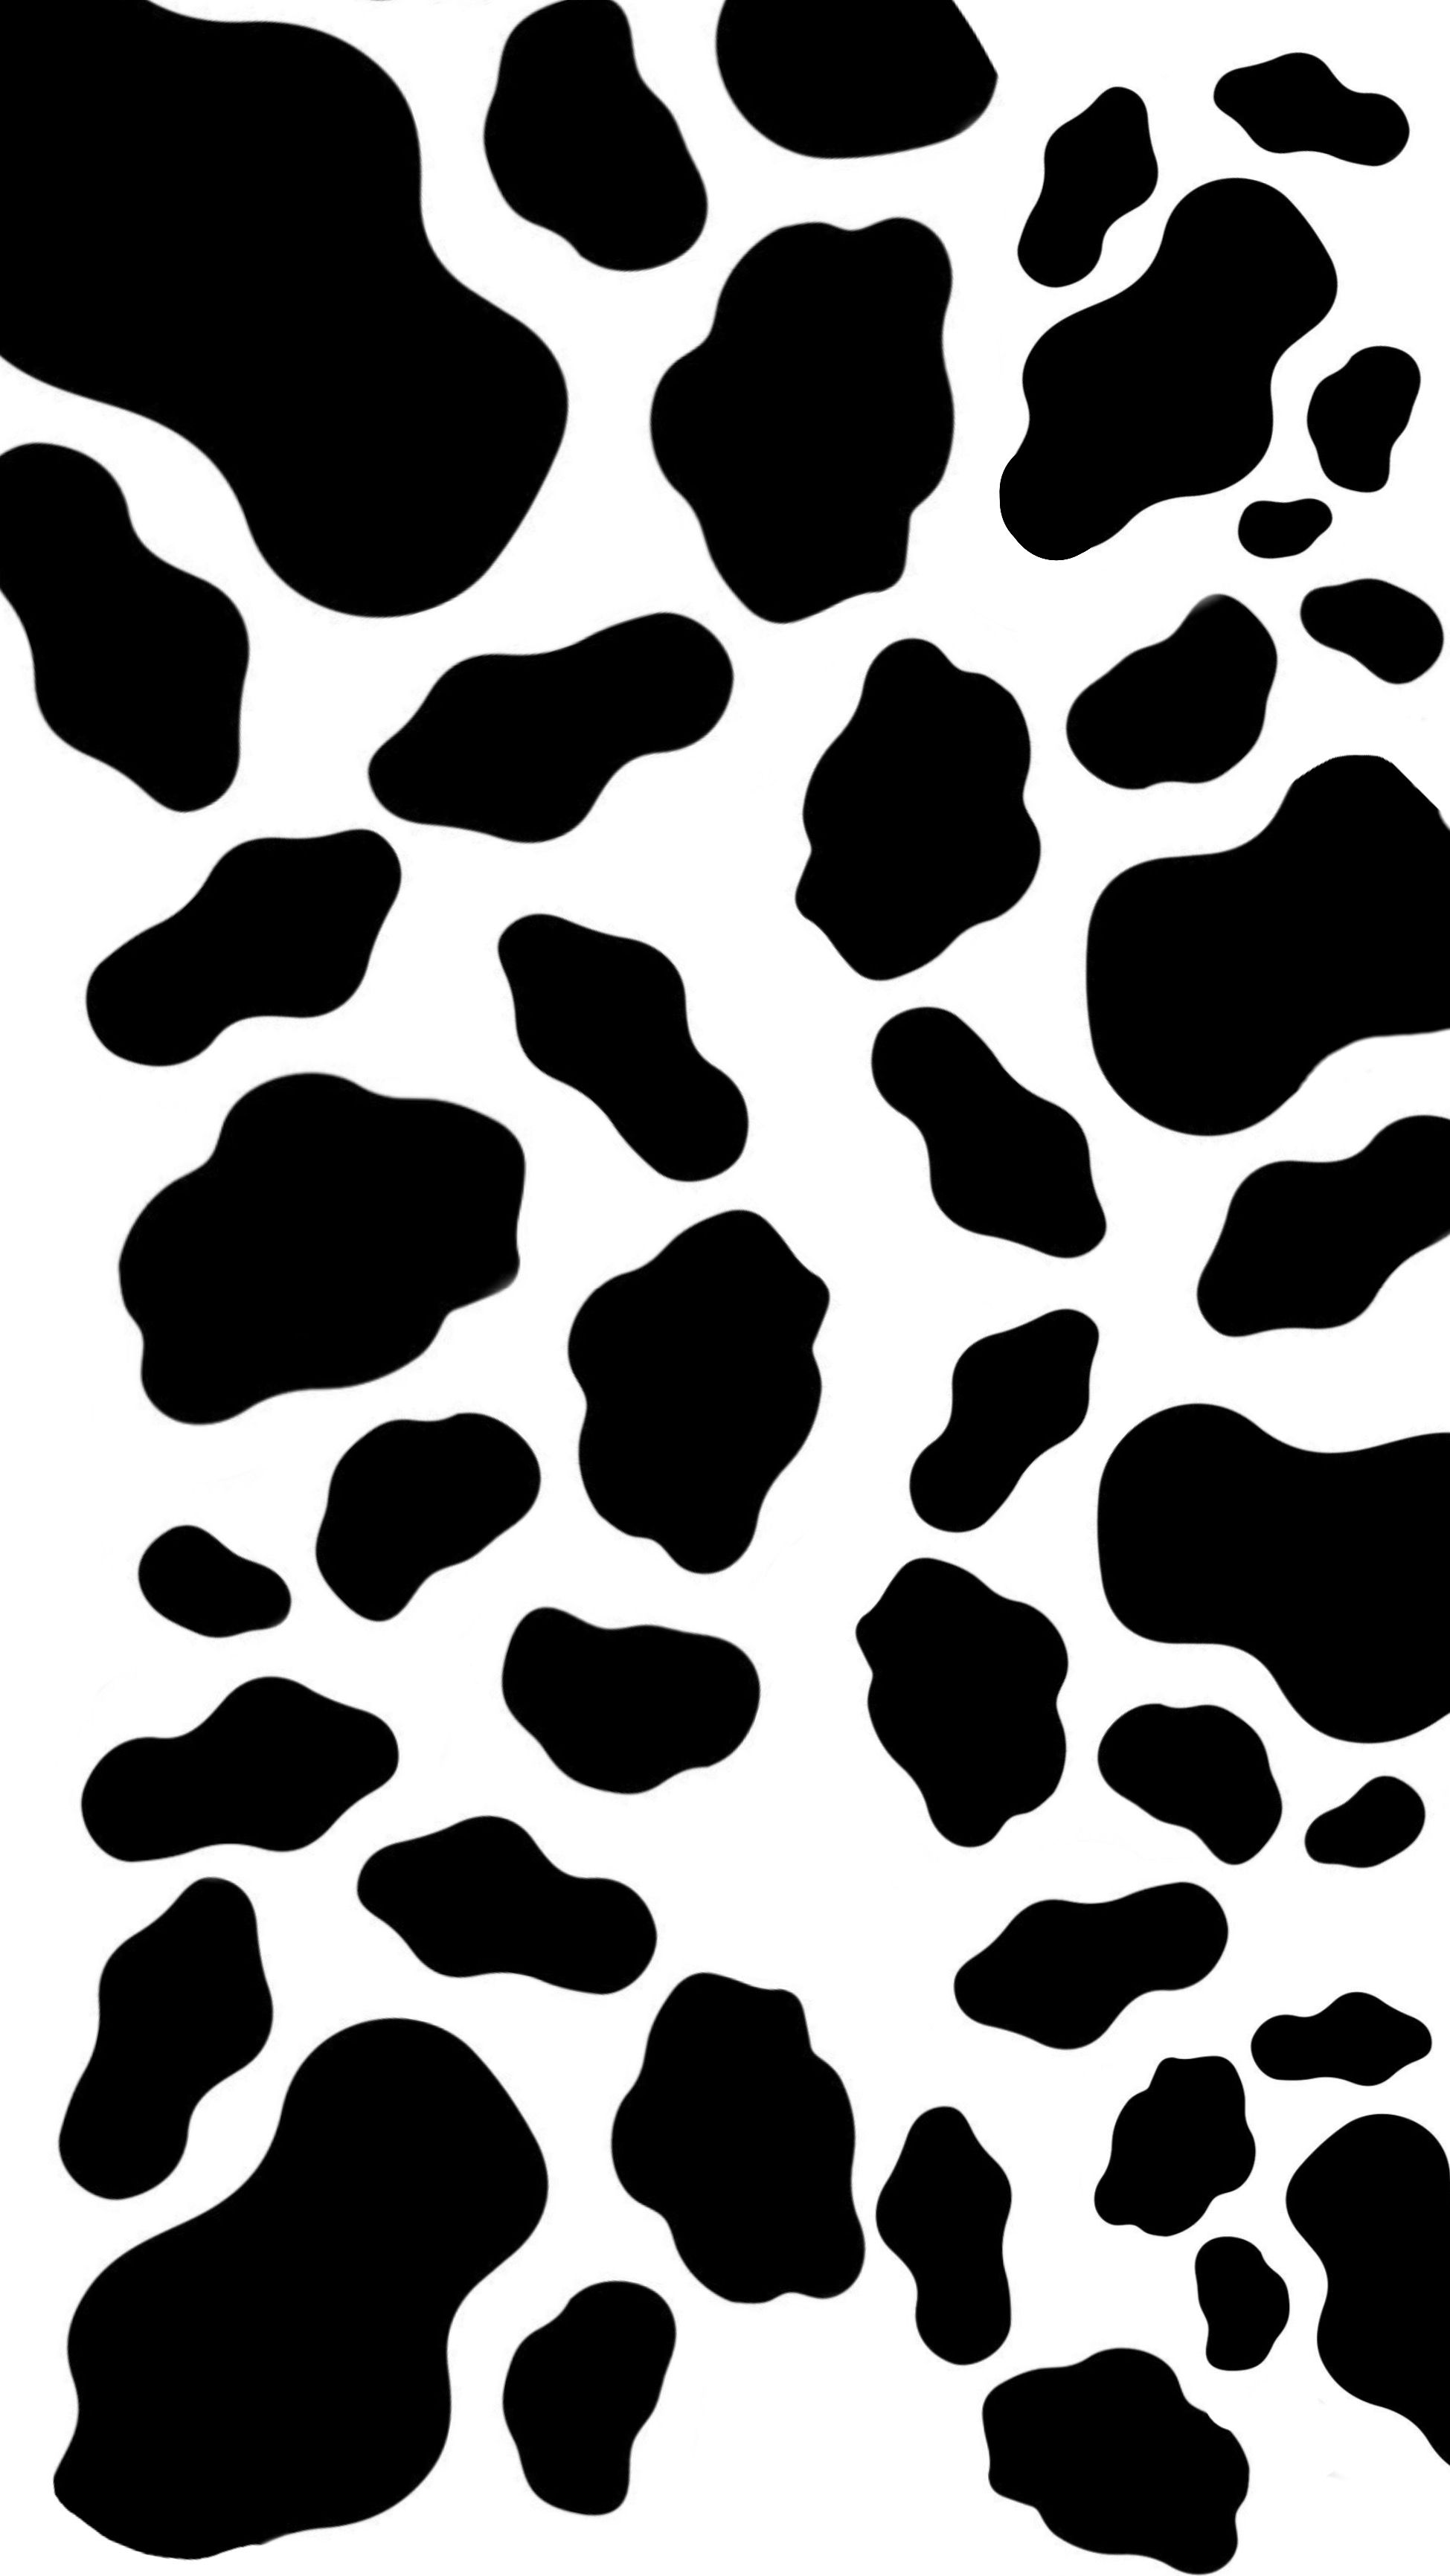 Cow print. Cow print wallpaper, Cow wallpaper, Cow print